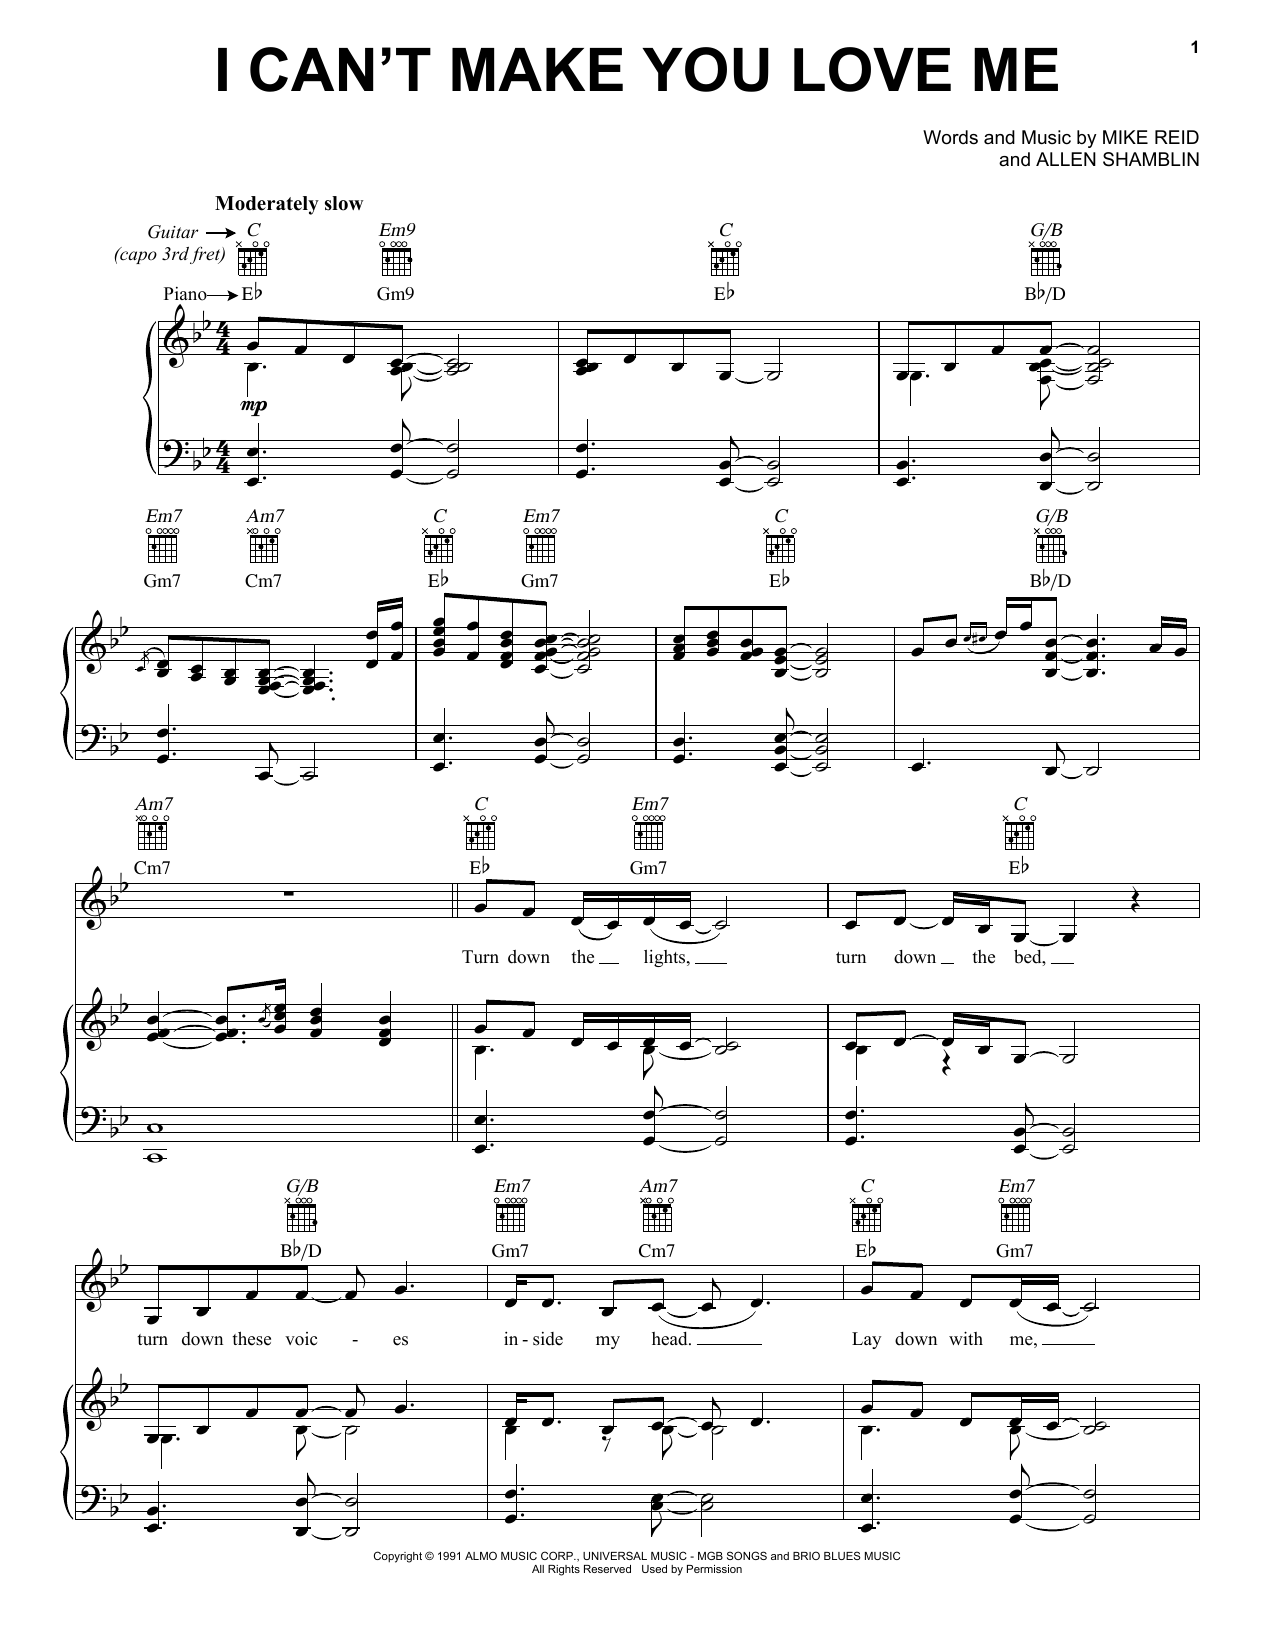 Bonnie Raitt I Can't Make You Love Me Sheet Music Notes & Chords for Guitar Tab - Download or Print PDF